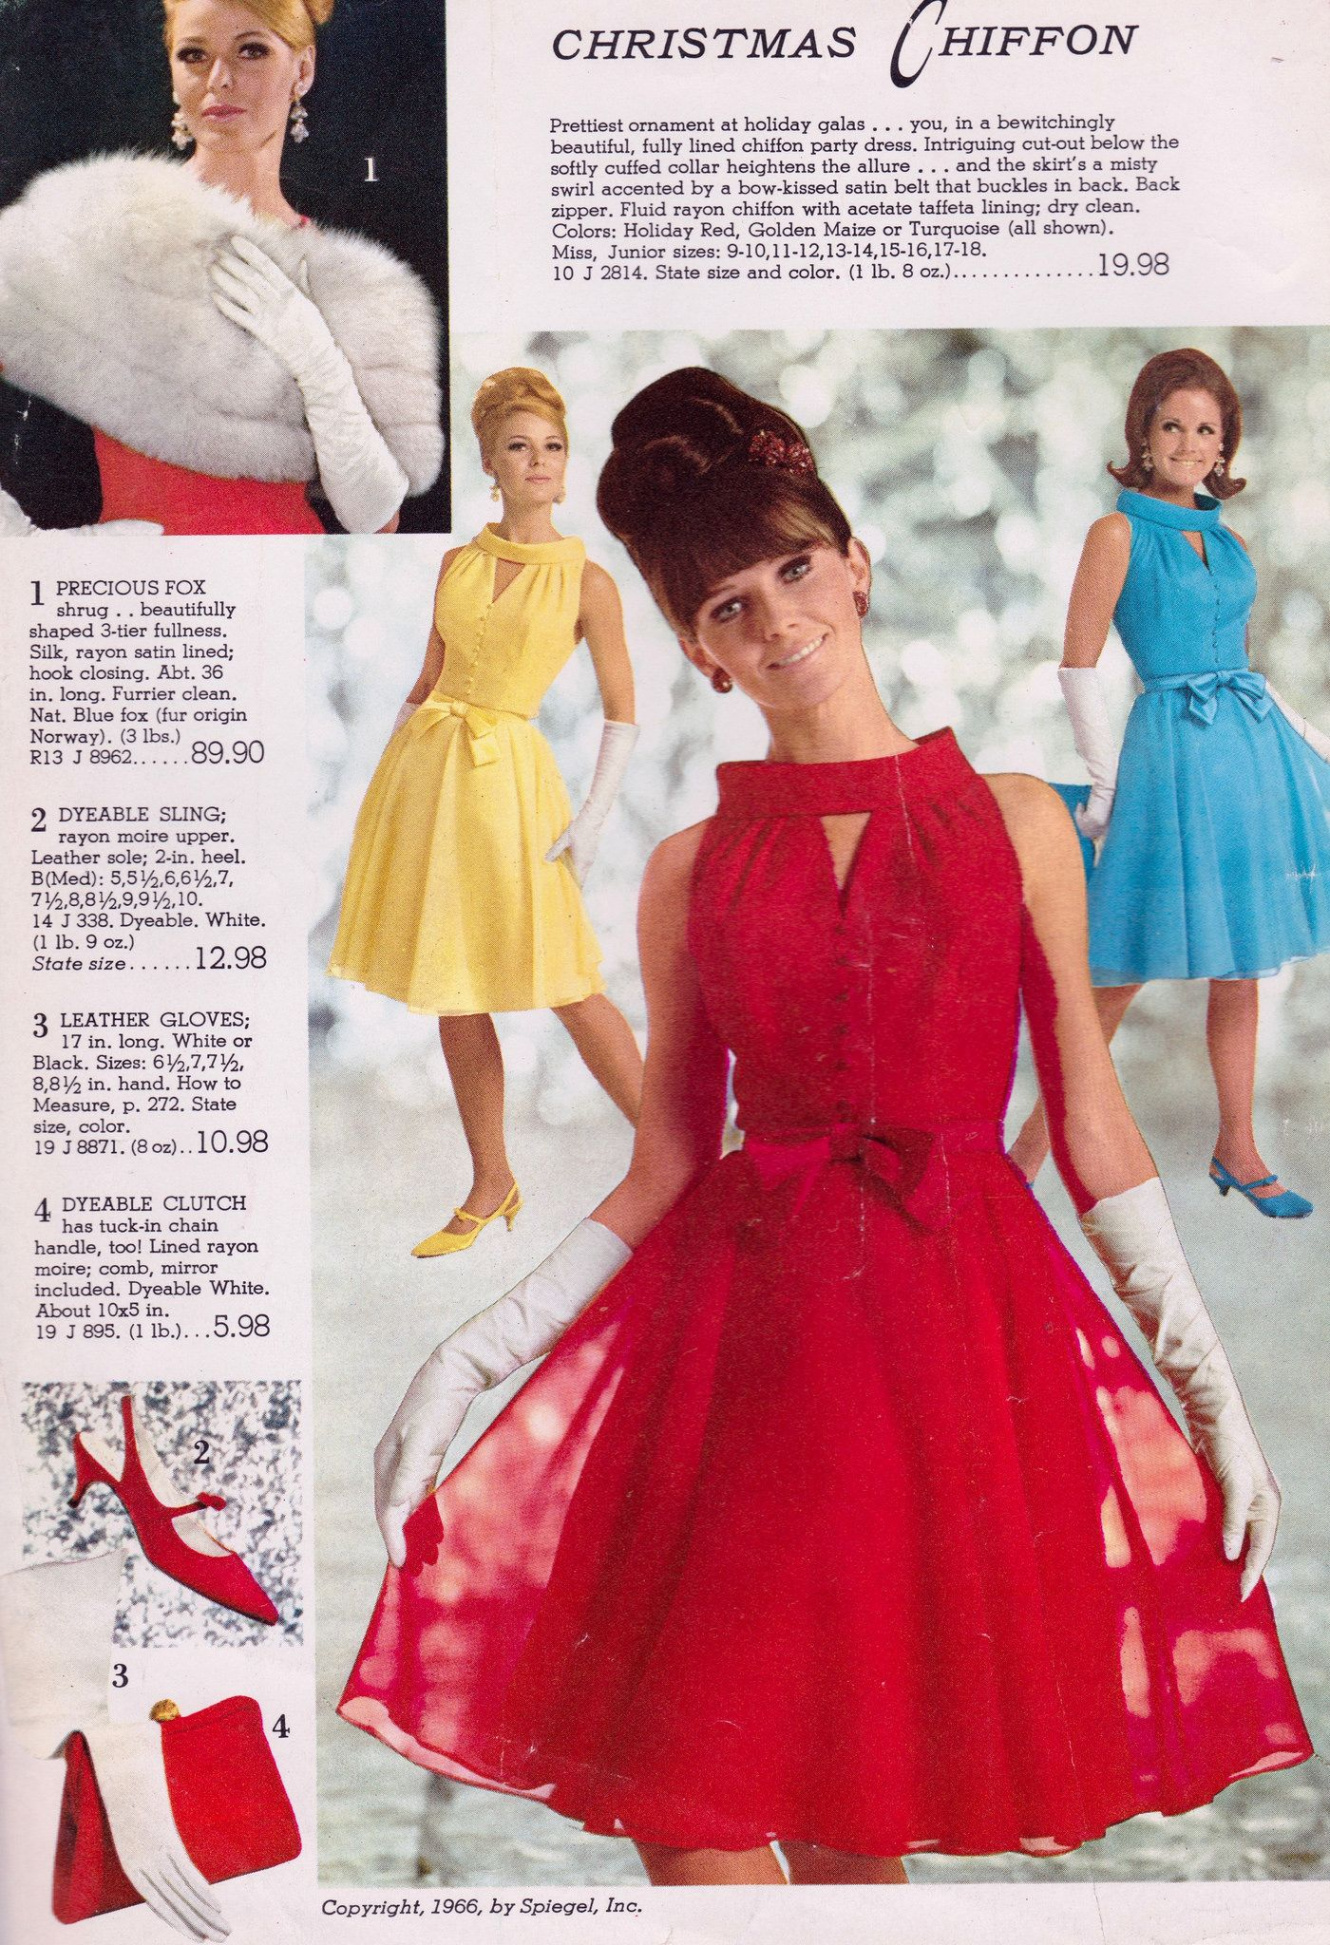 Spiegel Catalog Christmas   Fashion, Vintage fashion, Groovy